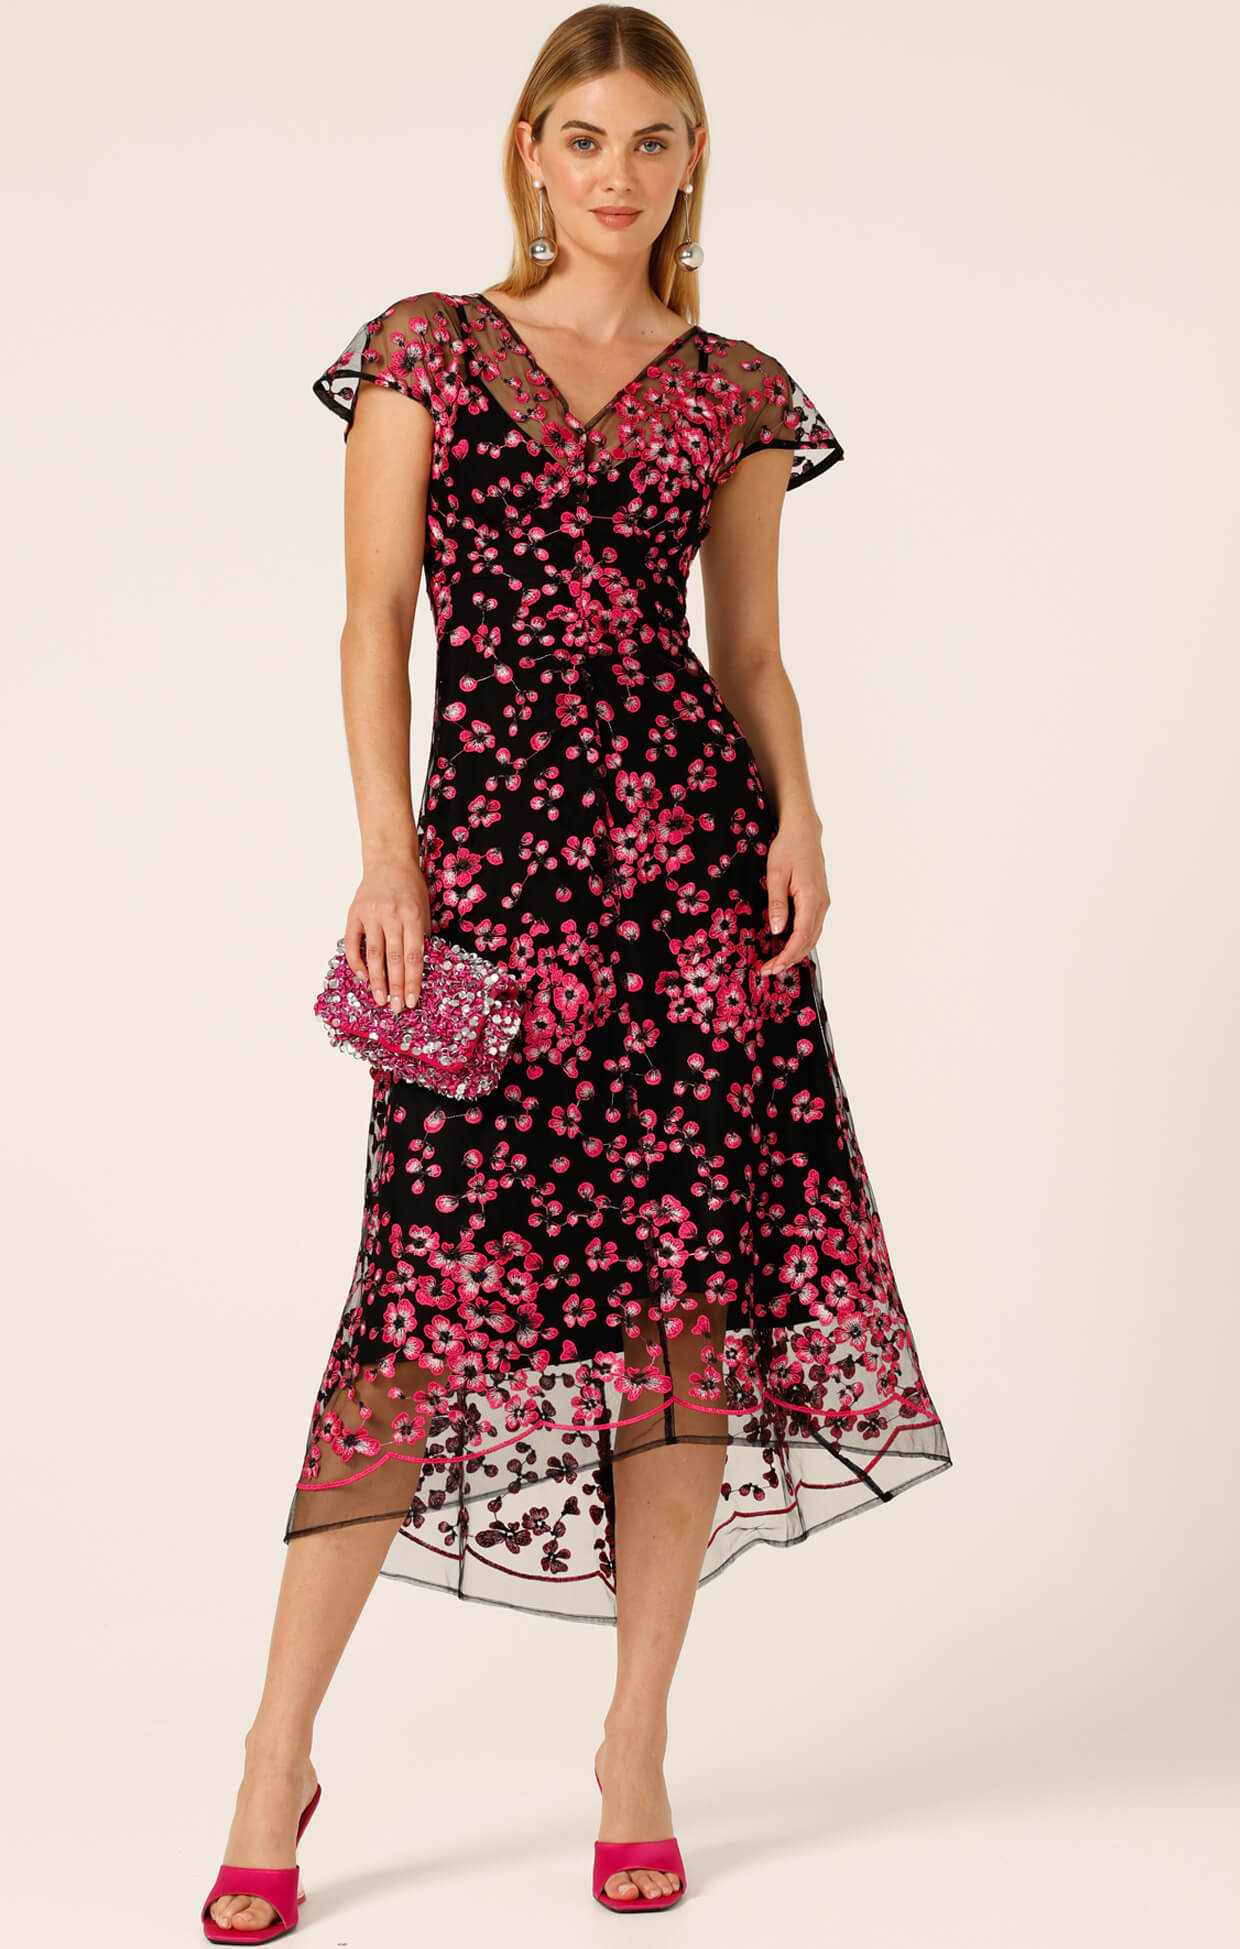 Joan Orchid Dress - Pink/Black